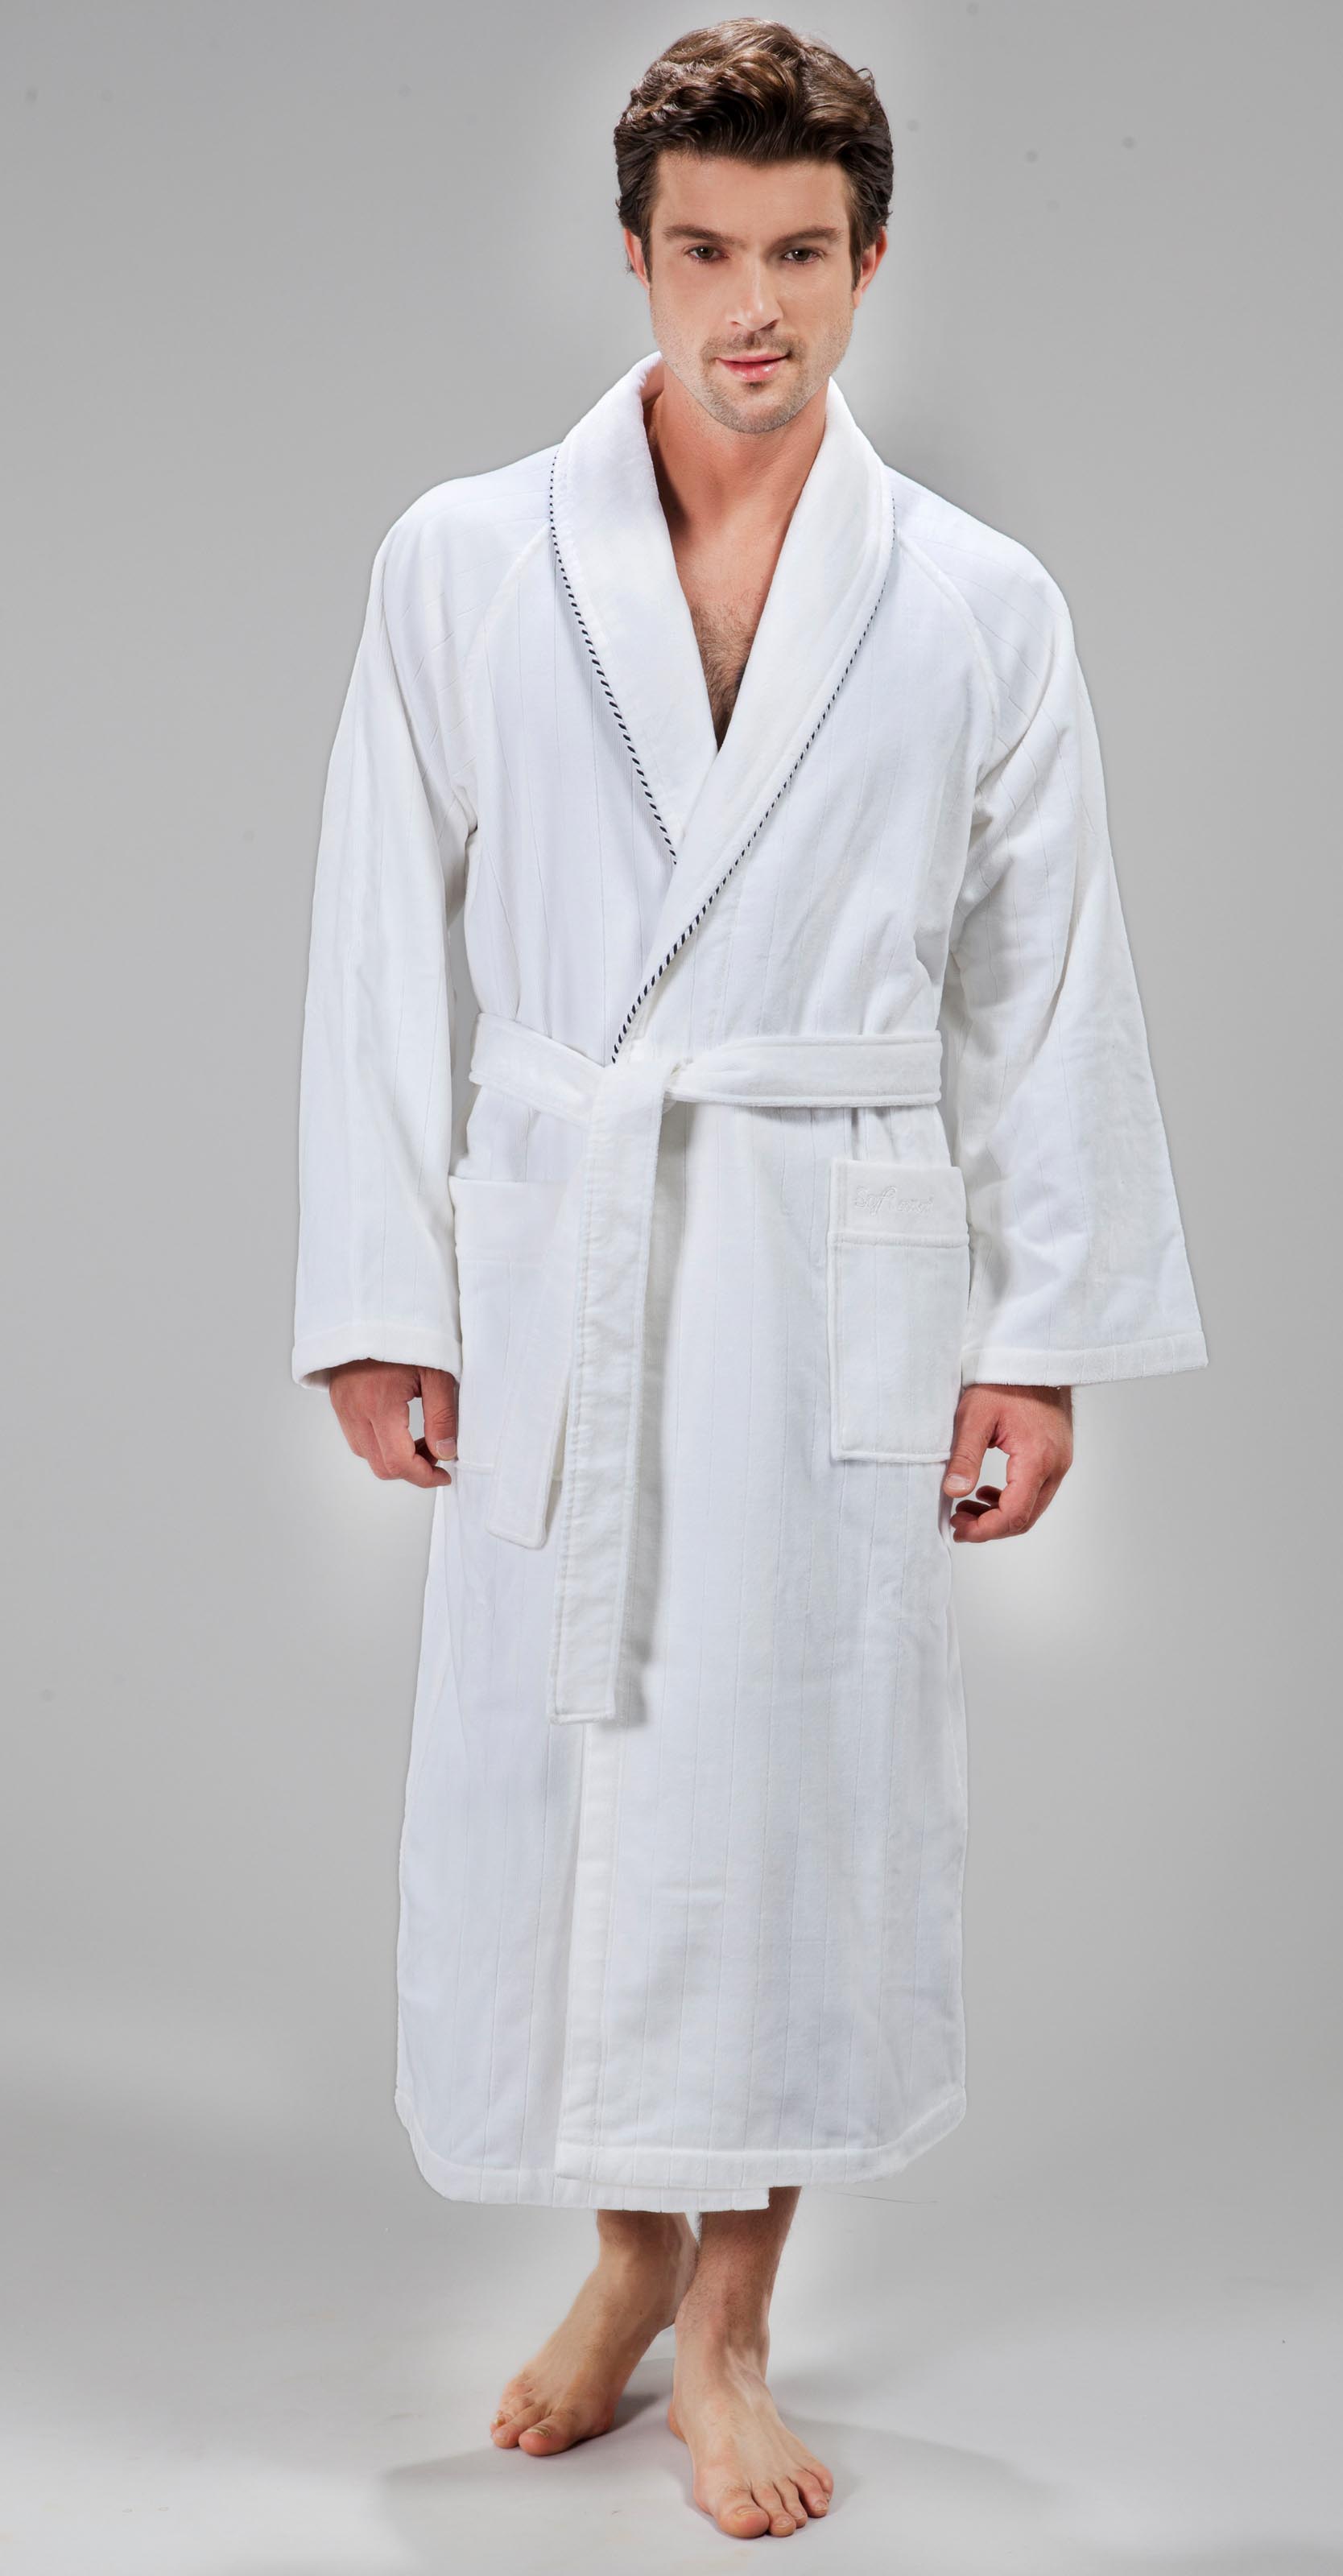 Банный халат Stacy Цвет: Белый (M), размер M sfc669832 Банный халат Stacy Цвет: Белый (M) - фото 1